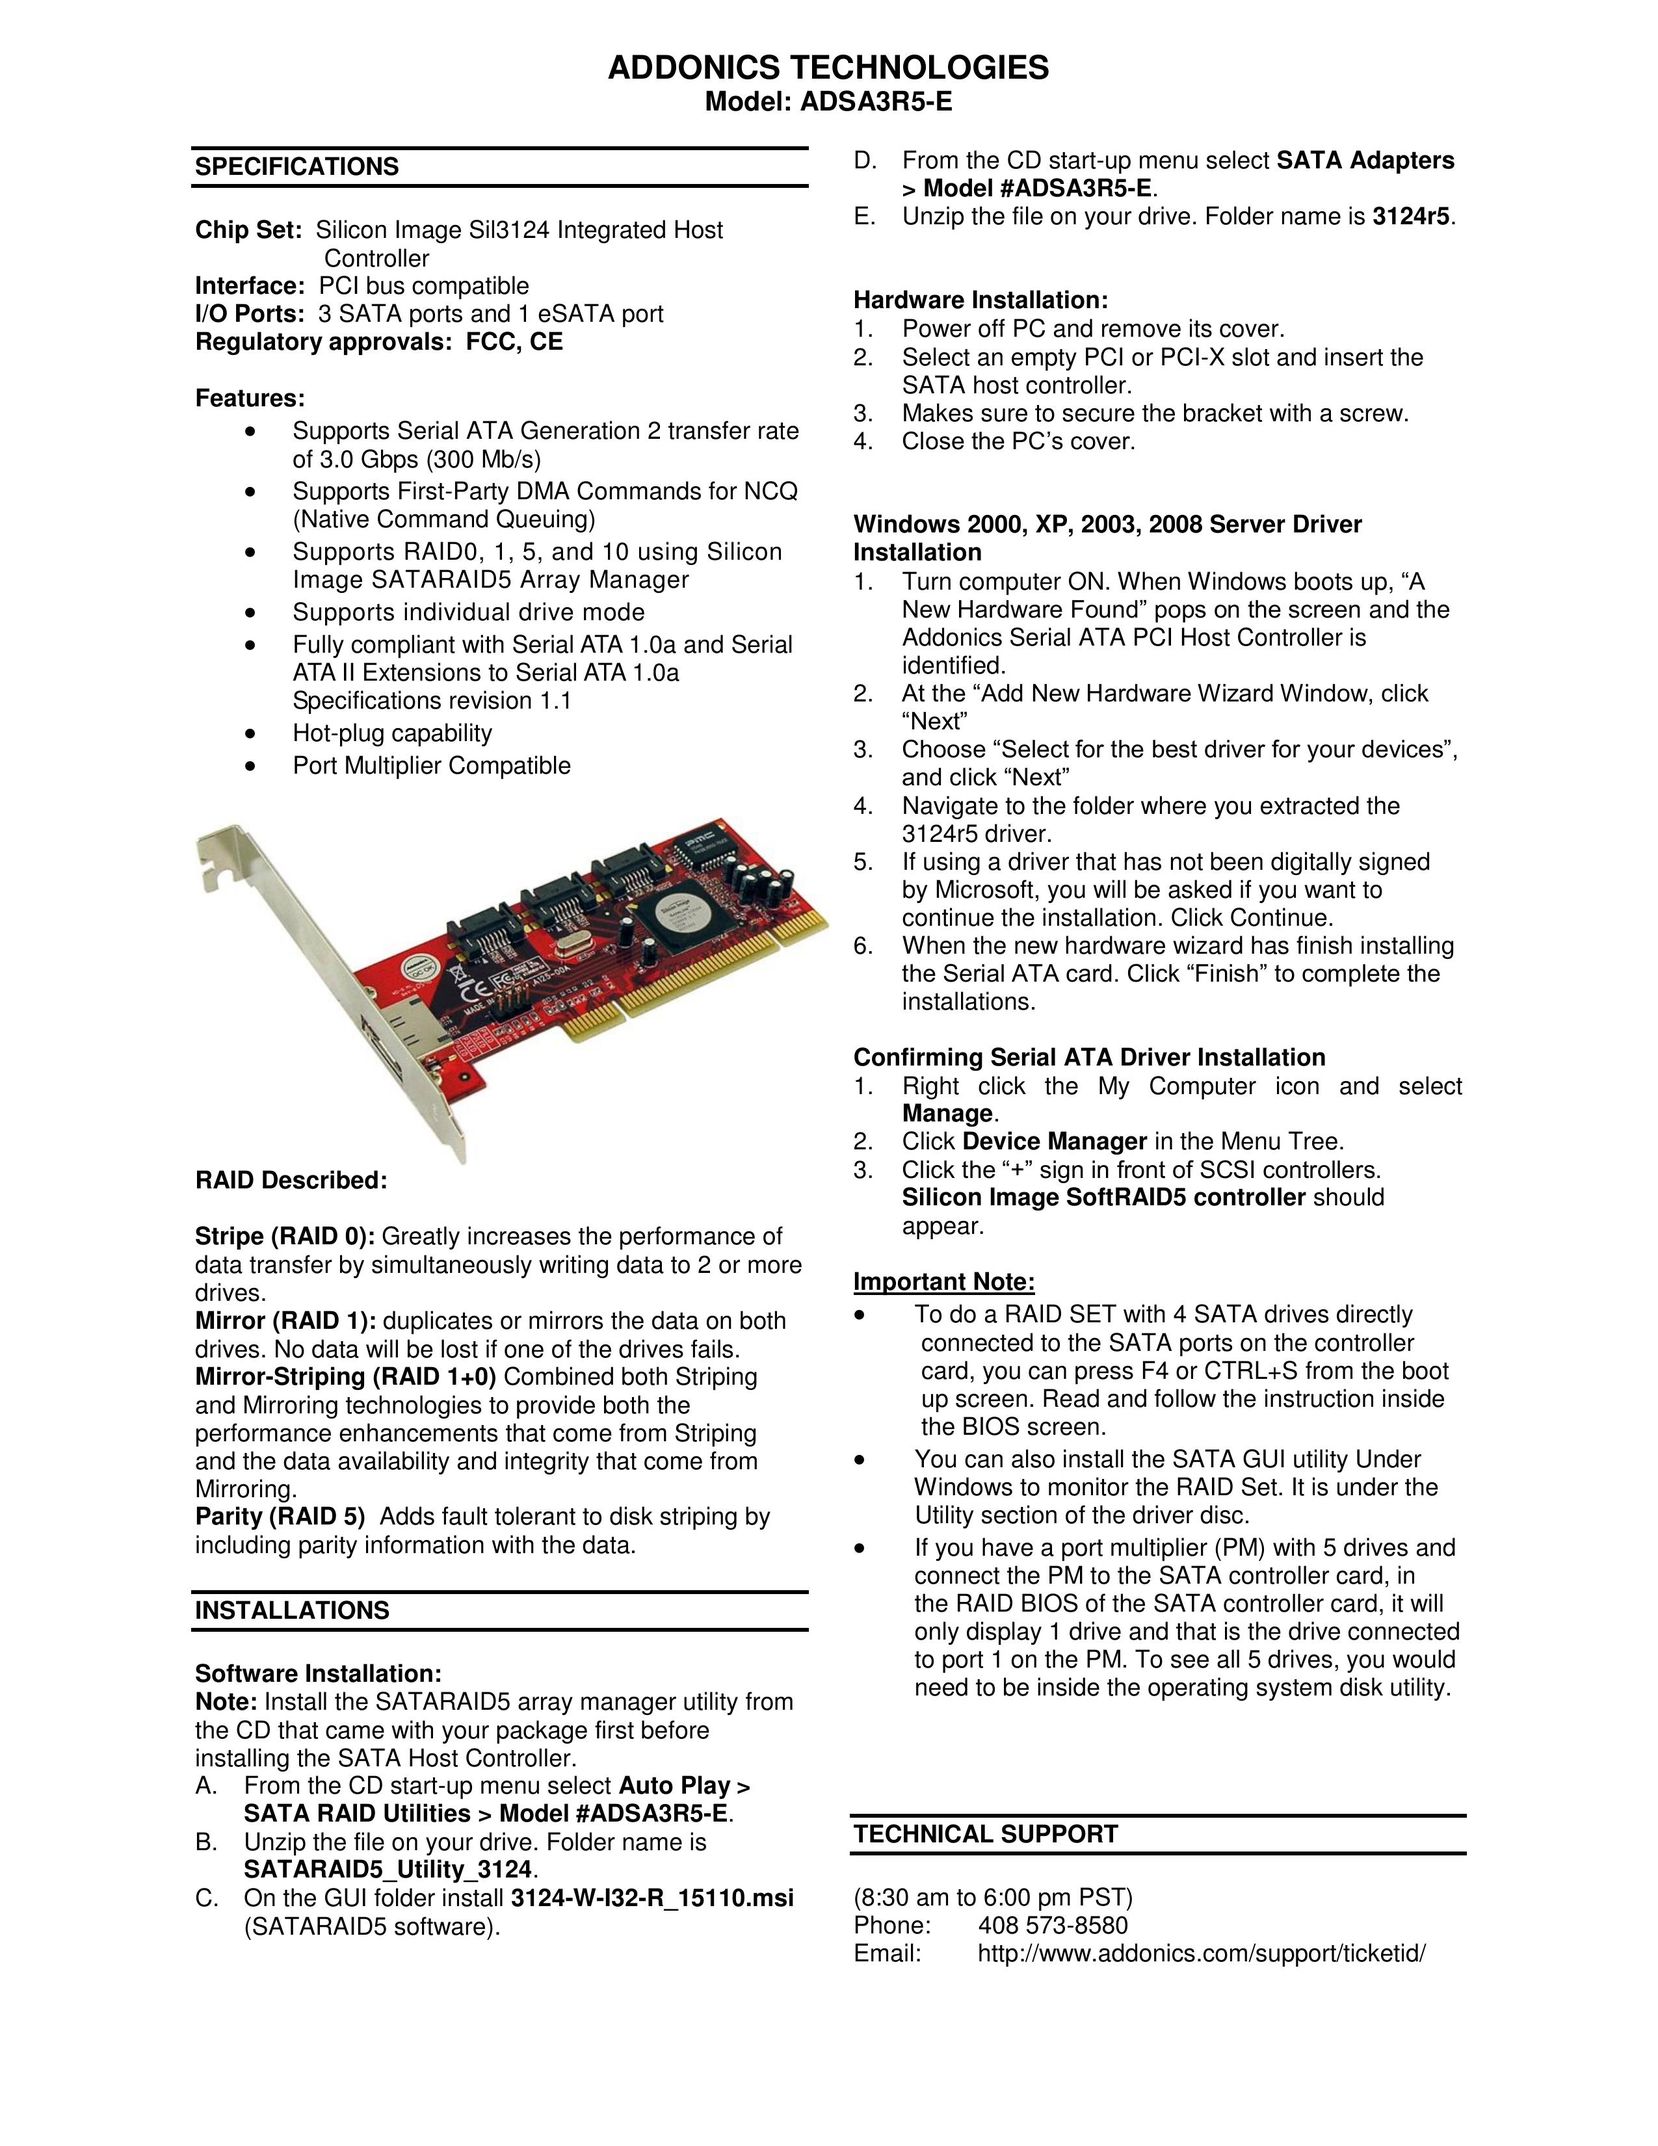 Addonics Technologies ADSA3R5-E Computer Hardware User Manual